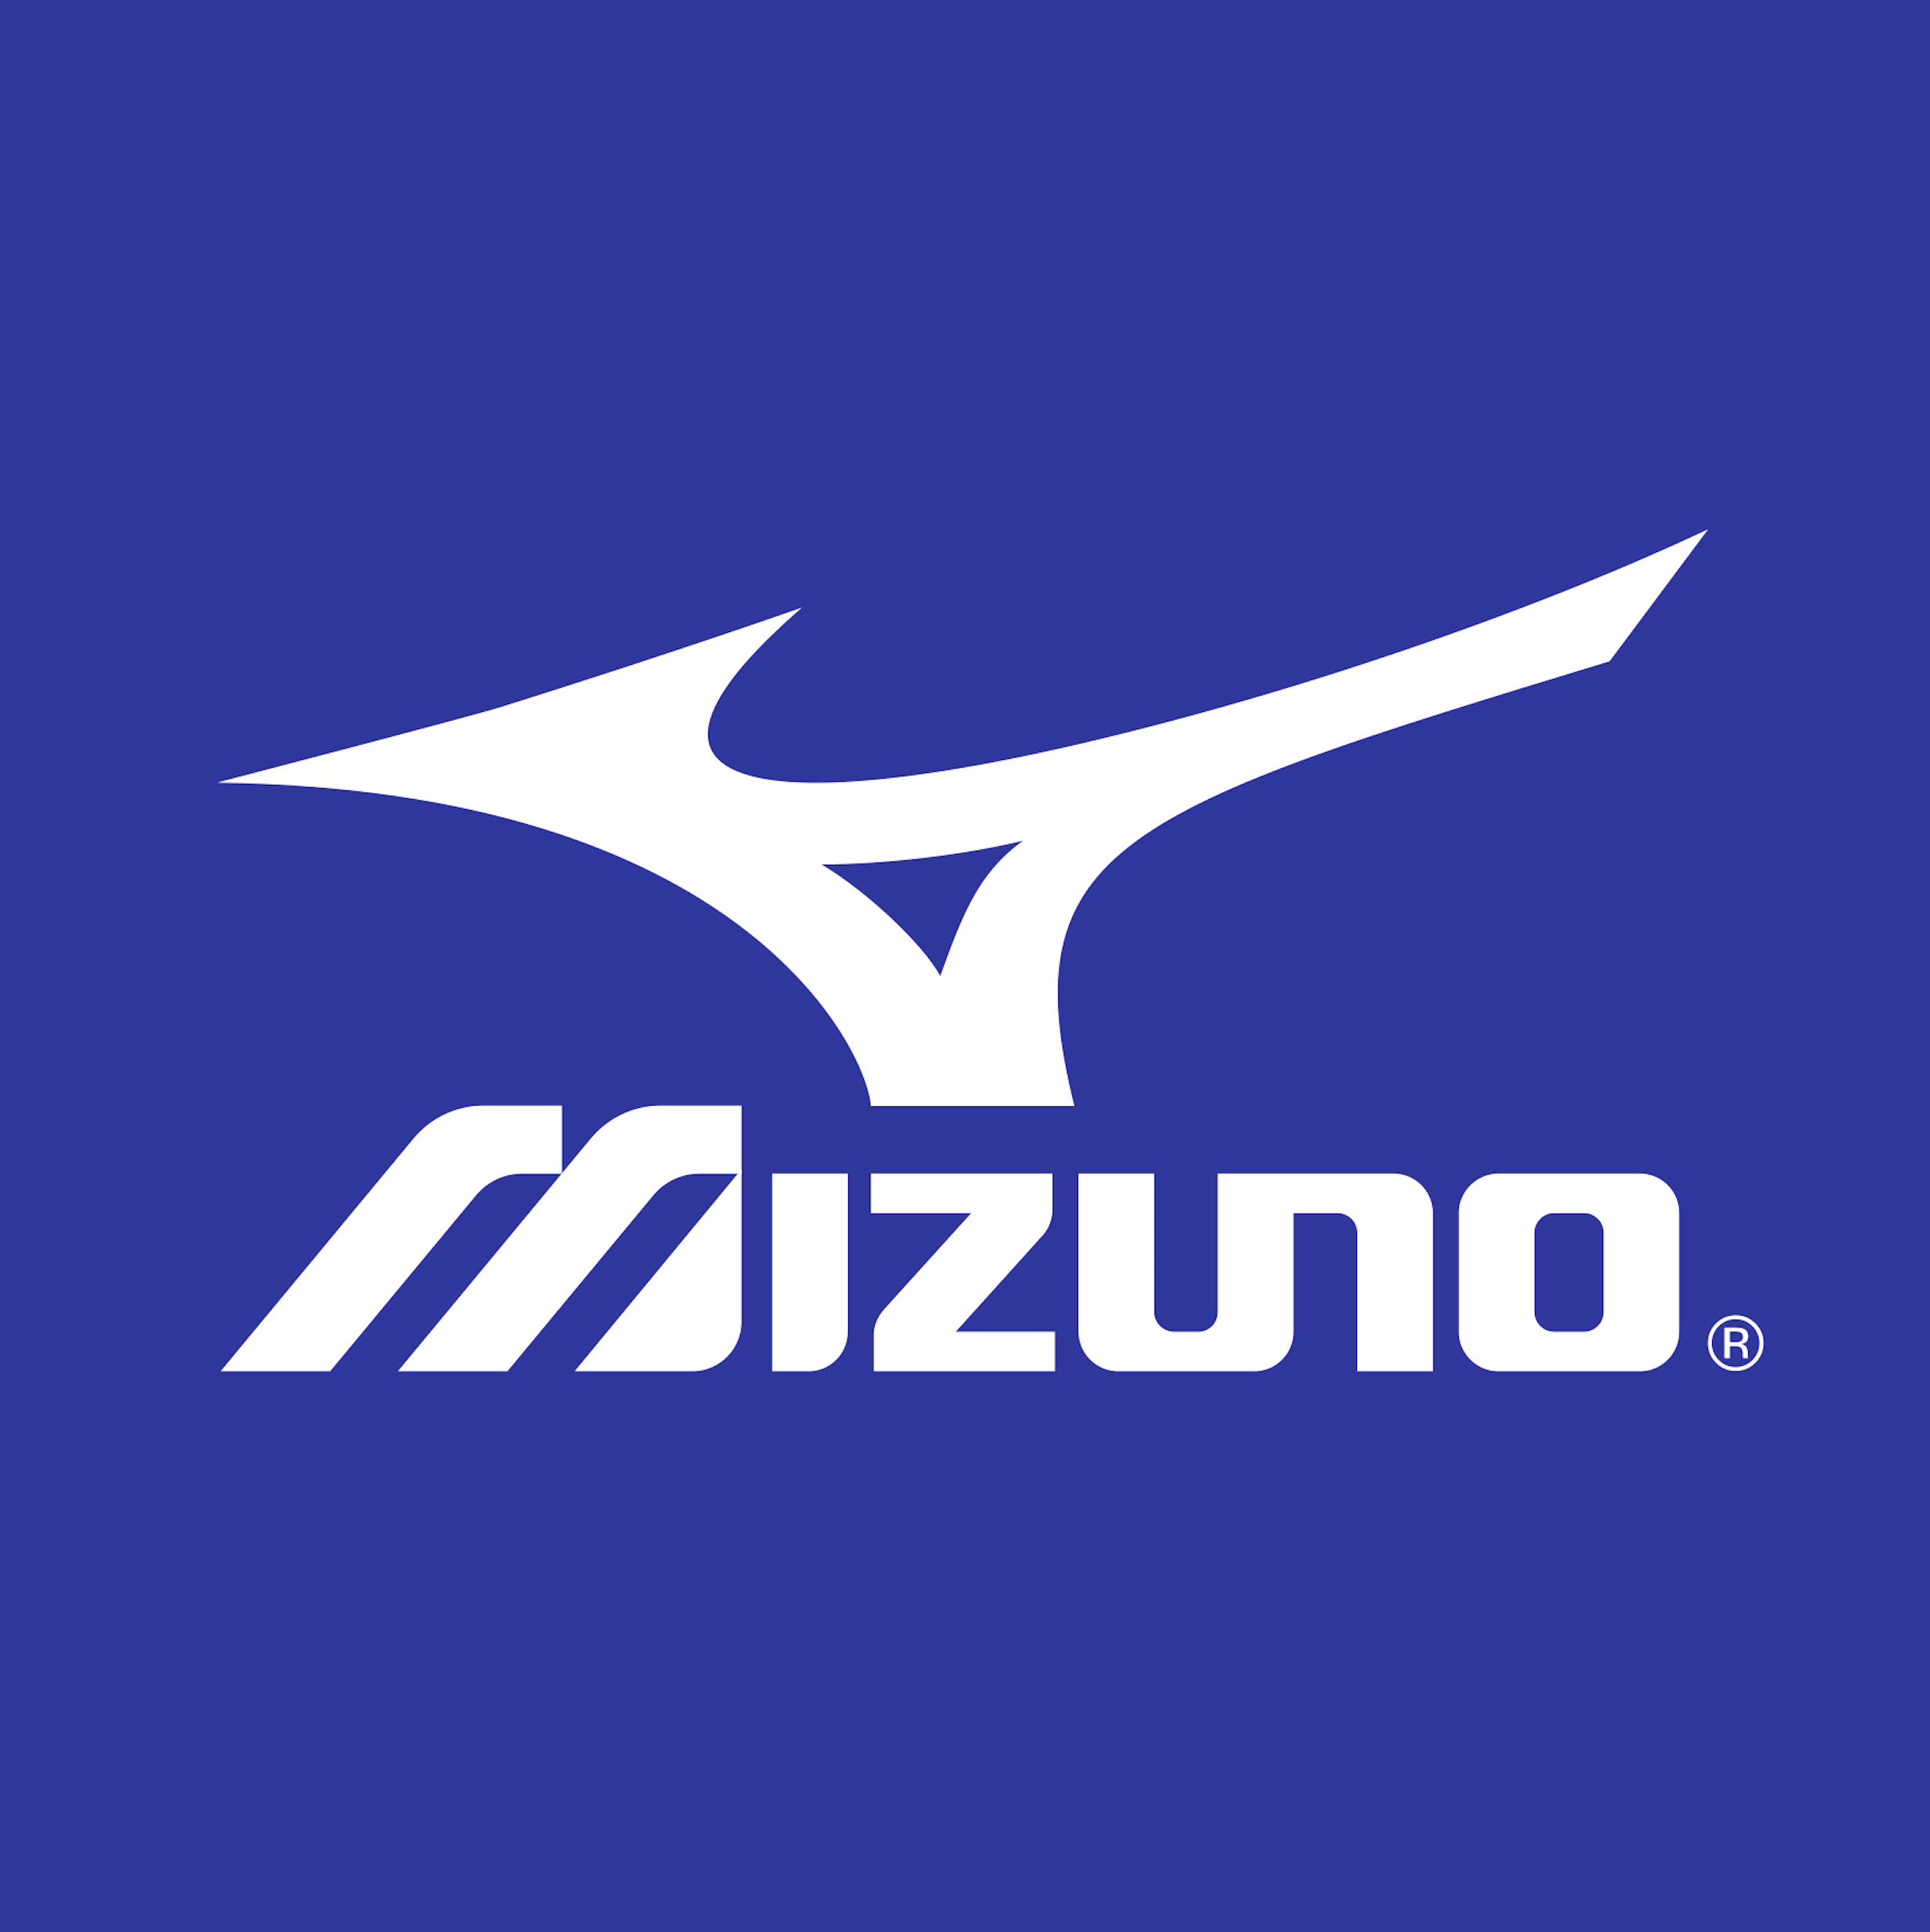 Mizuno Shop